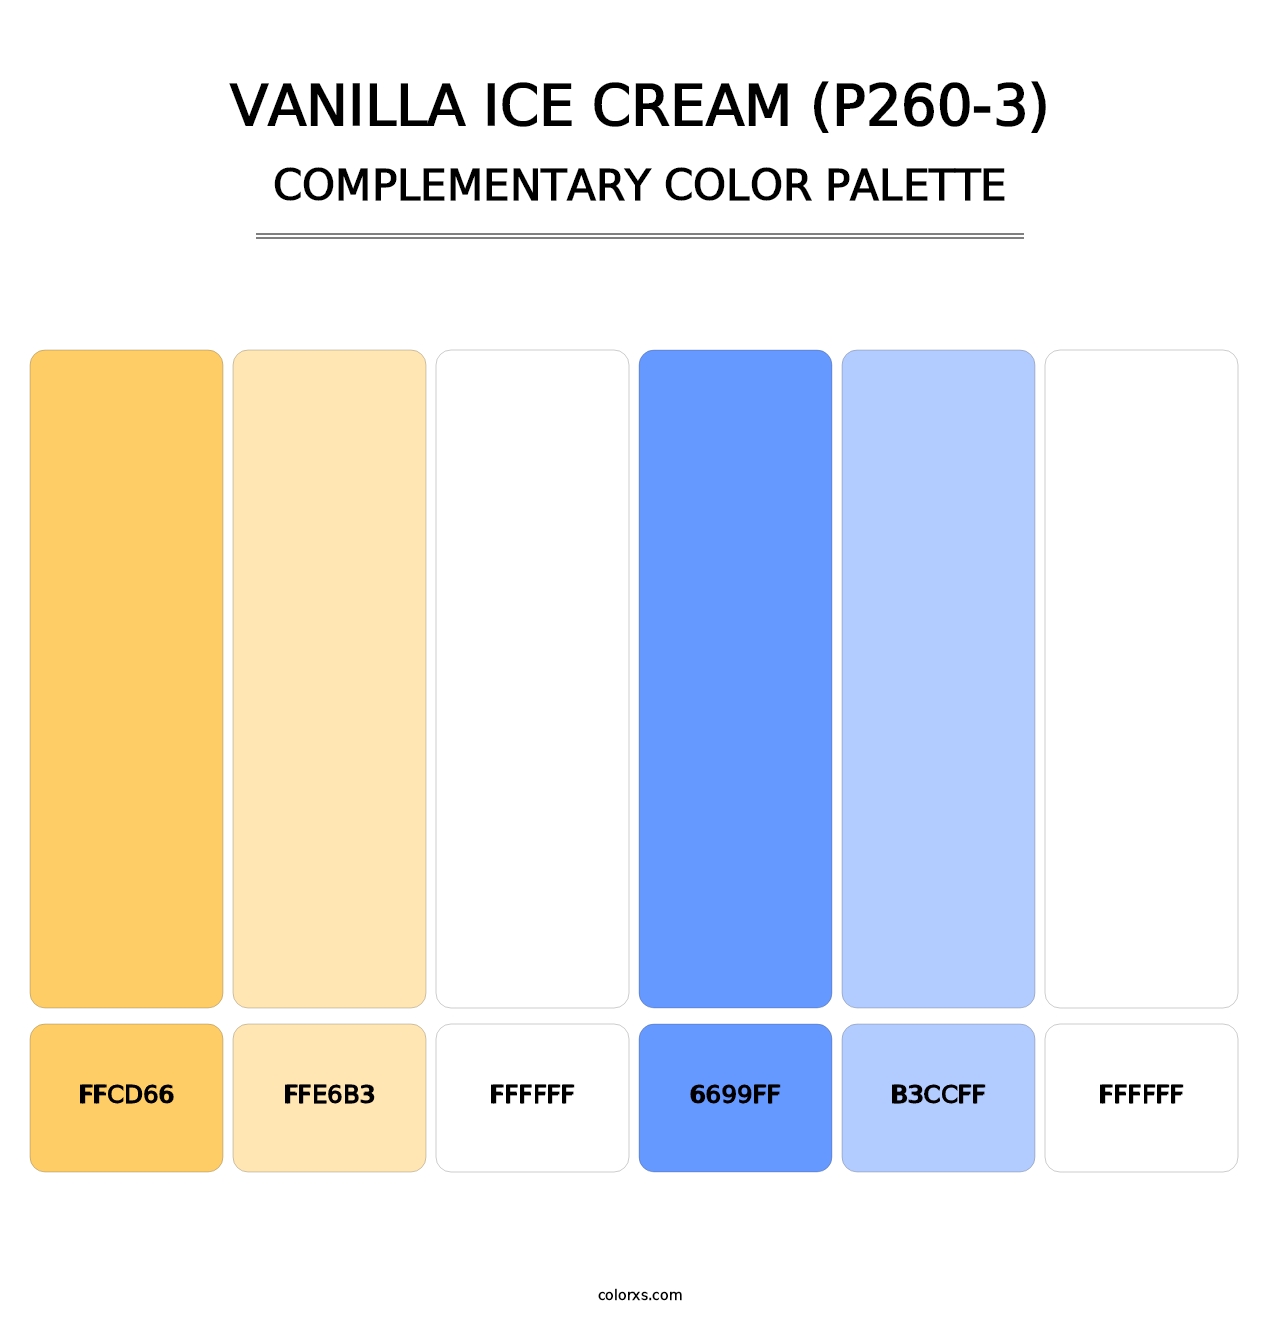 Vanilla Ice Cream (P260-3) - Complementary Color Palette